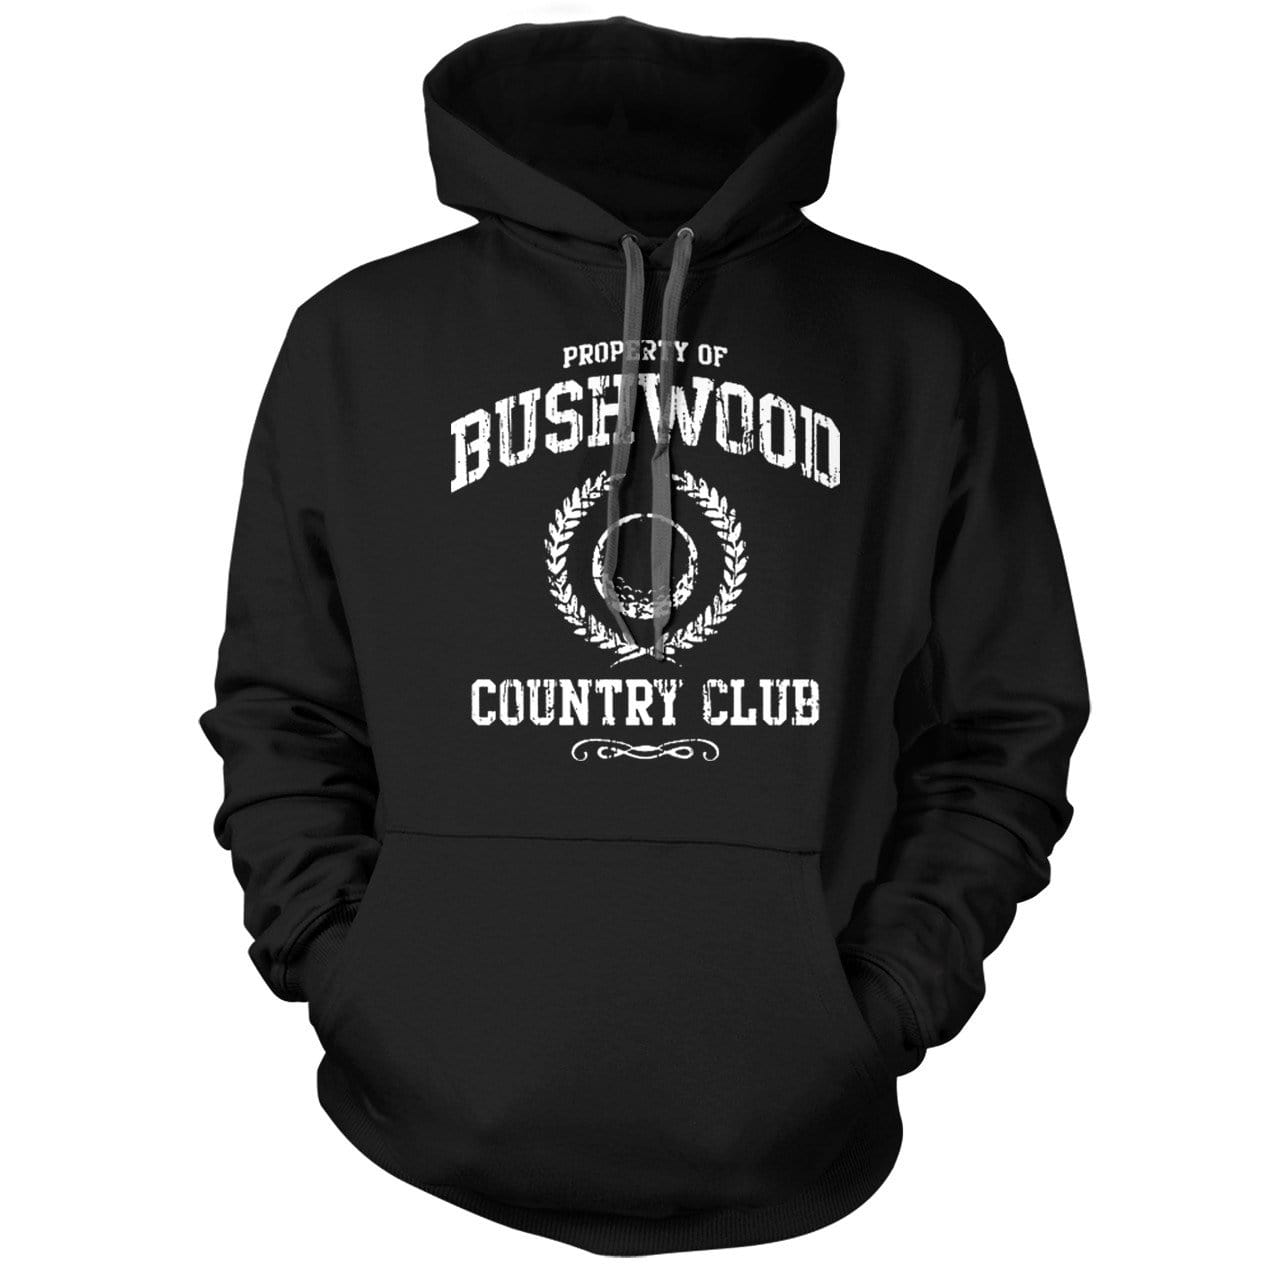 Bushwood Country Culb Caddyshack Black Hoodie - We Got Teez